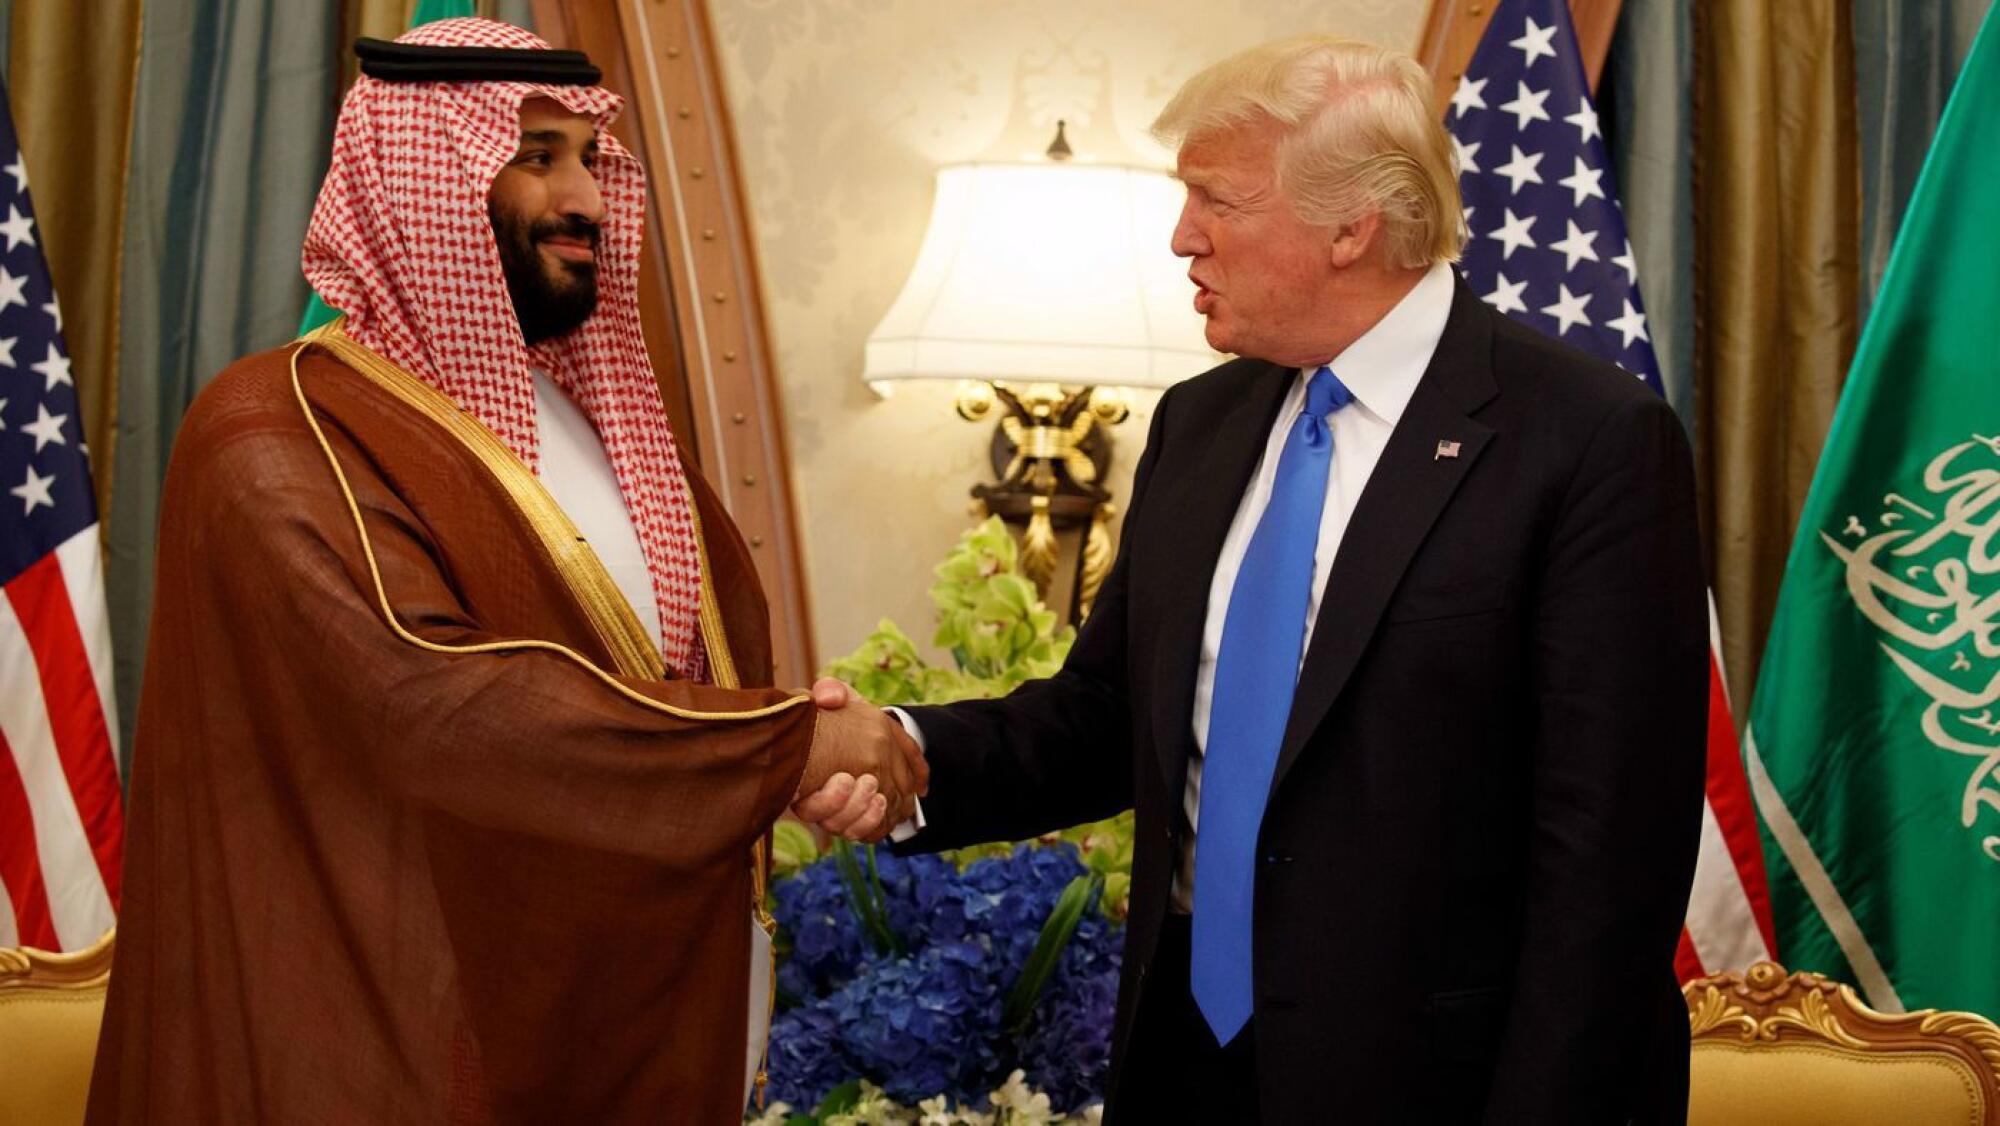 President Trump meets Saudi Crown Prince Mohammed bin Salman